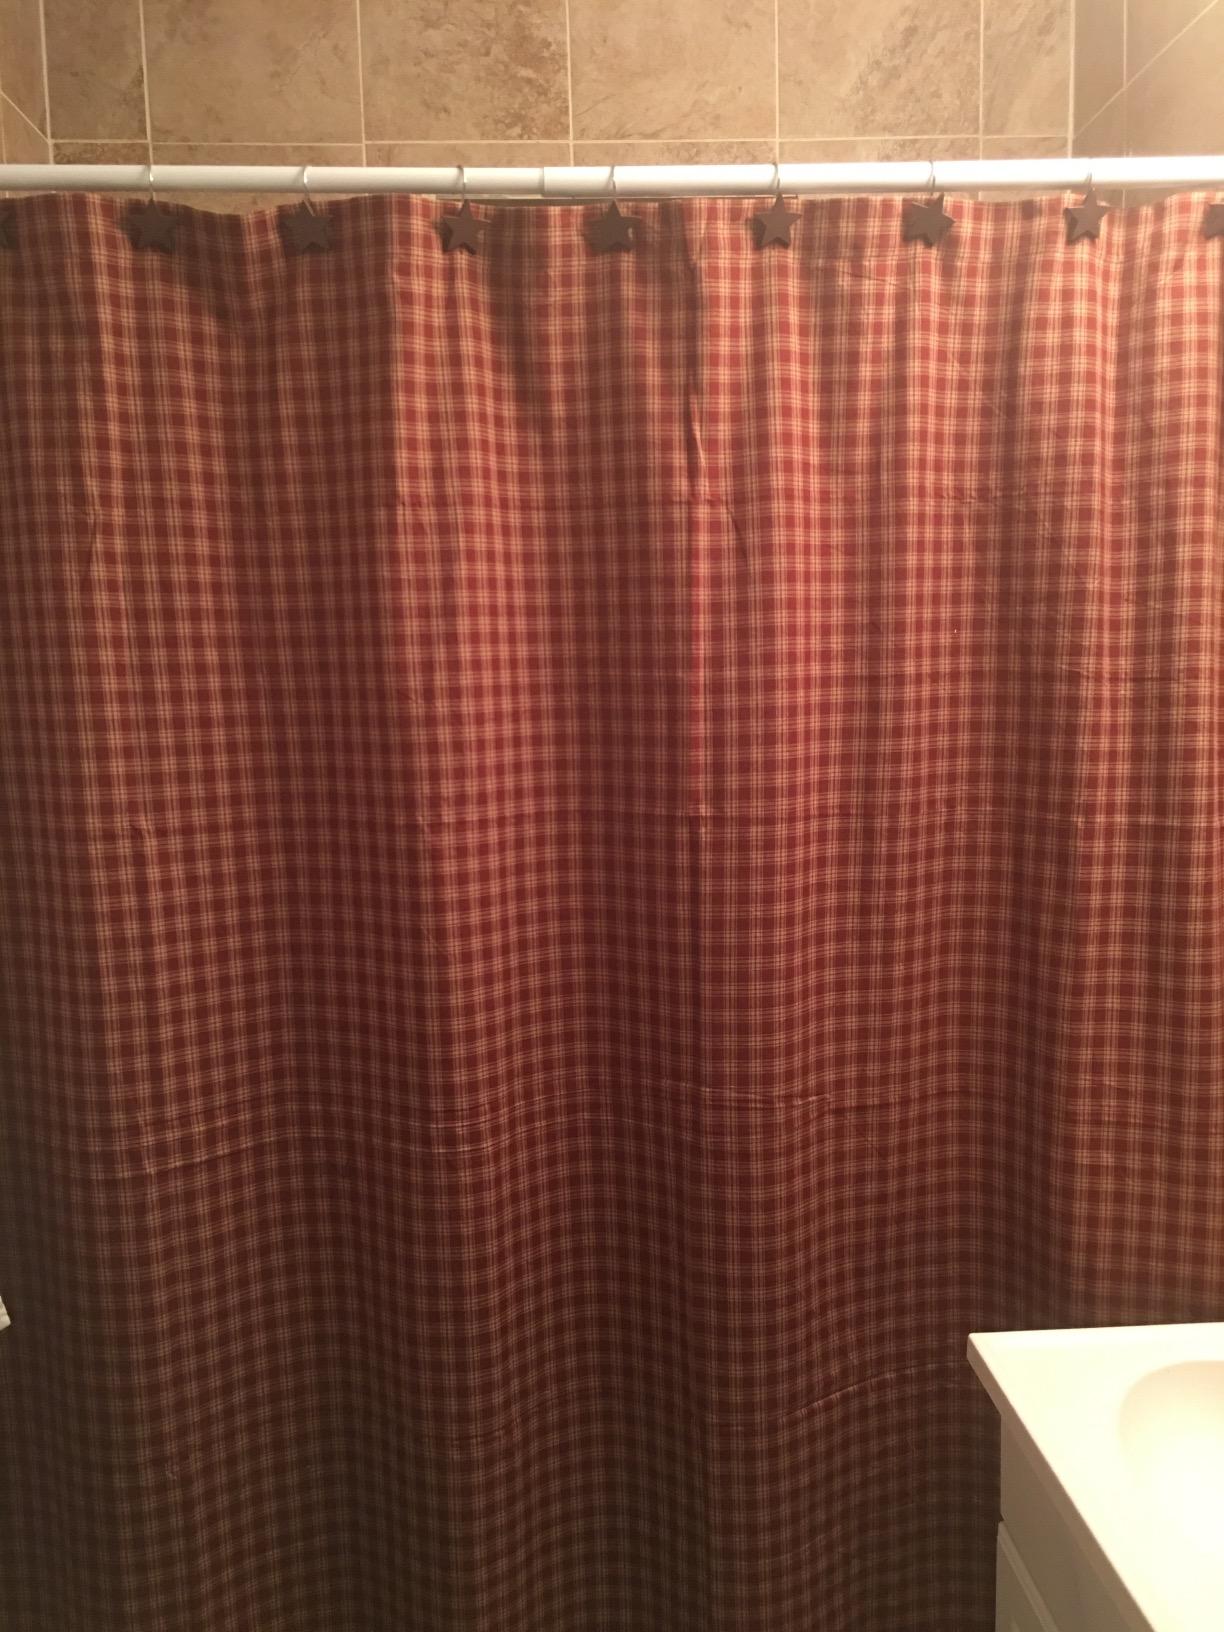 Sturbridge Shower Curtain Wine - 72